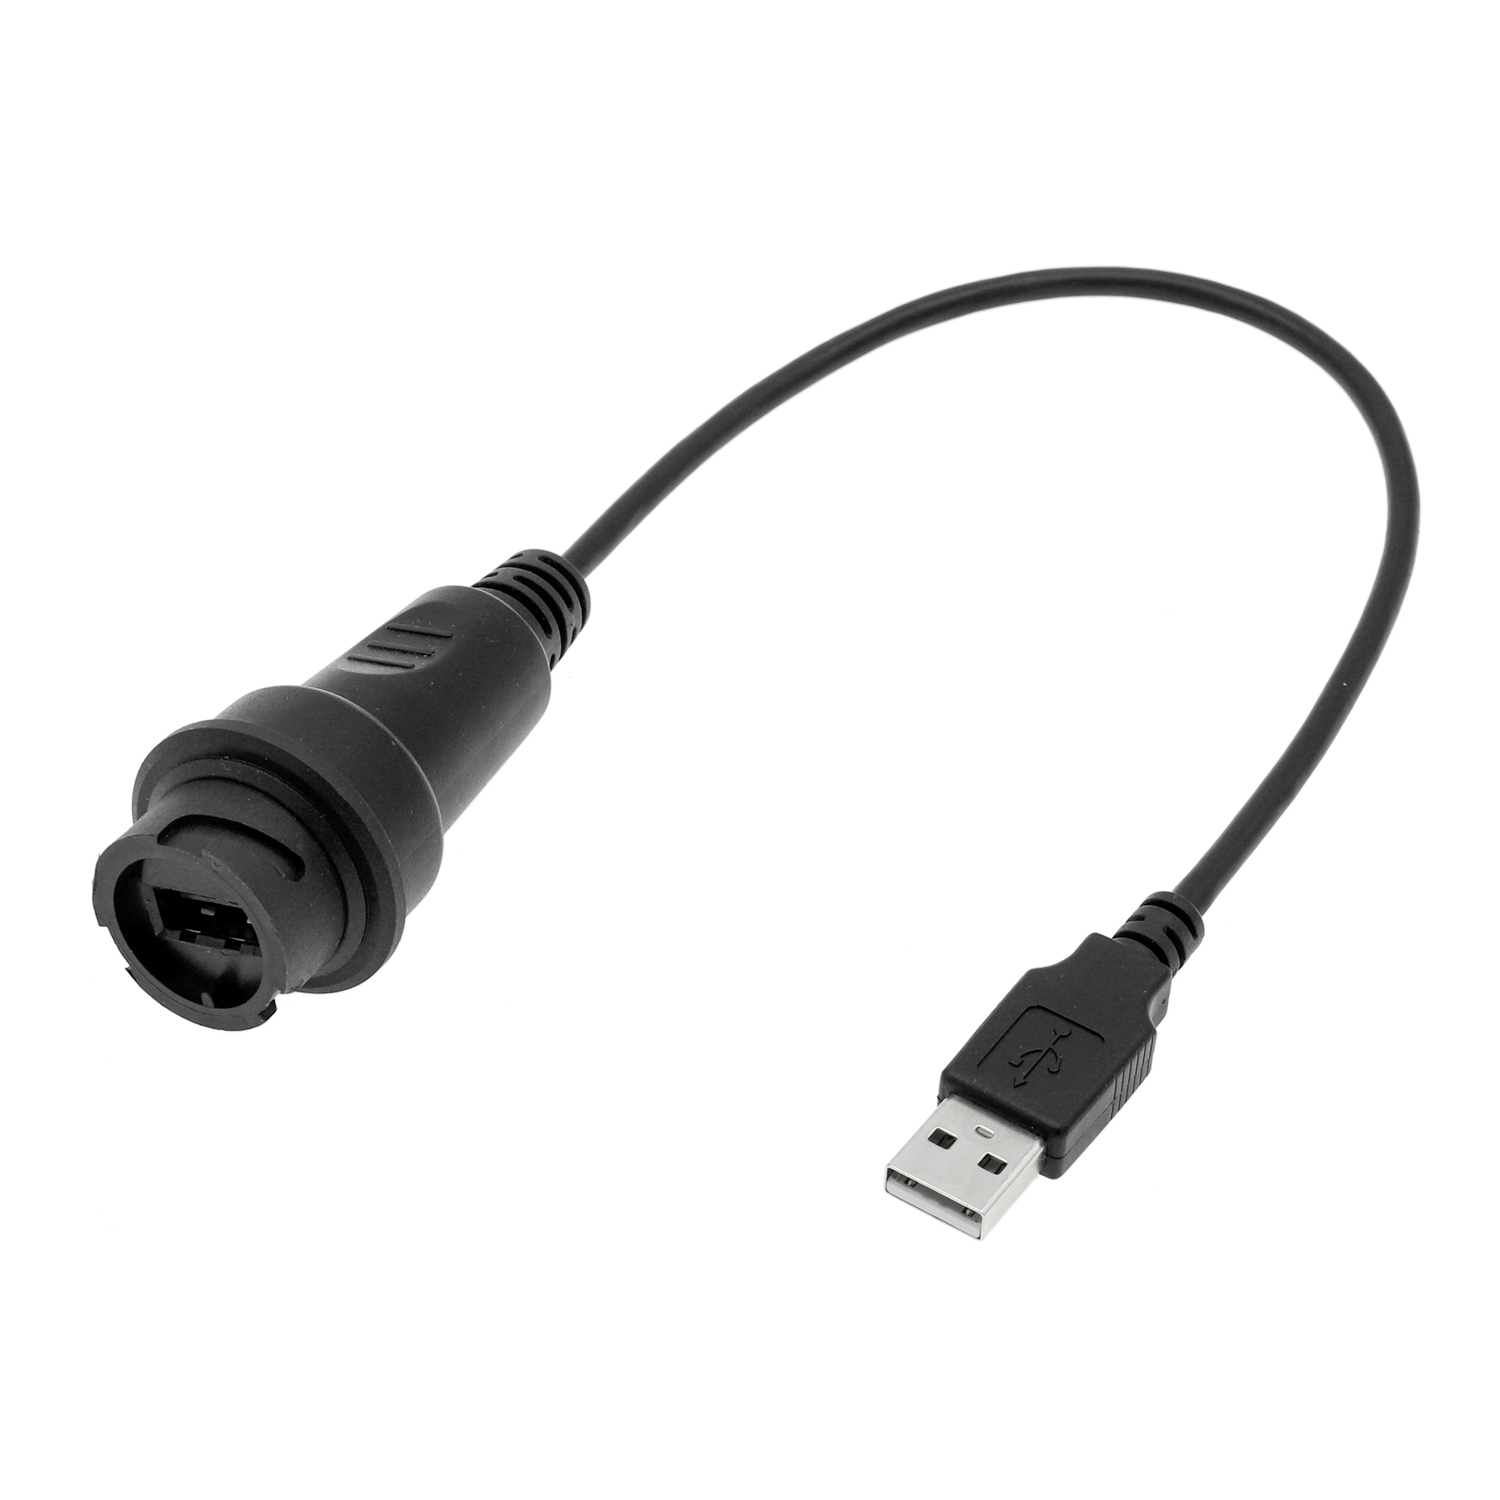 Cable HDMI para USB Un conector impermeable masculino para automóviles 